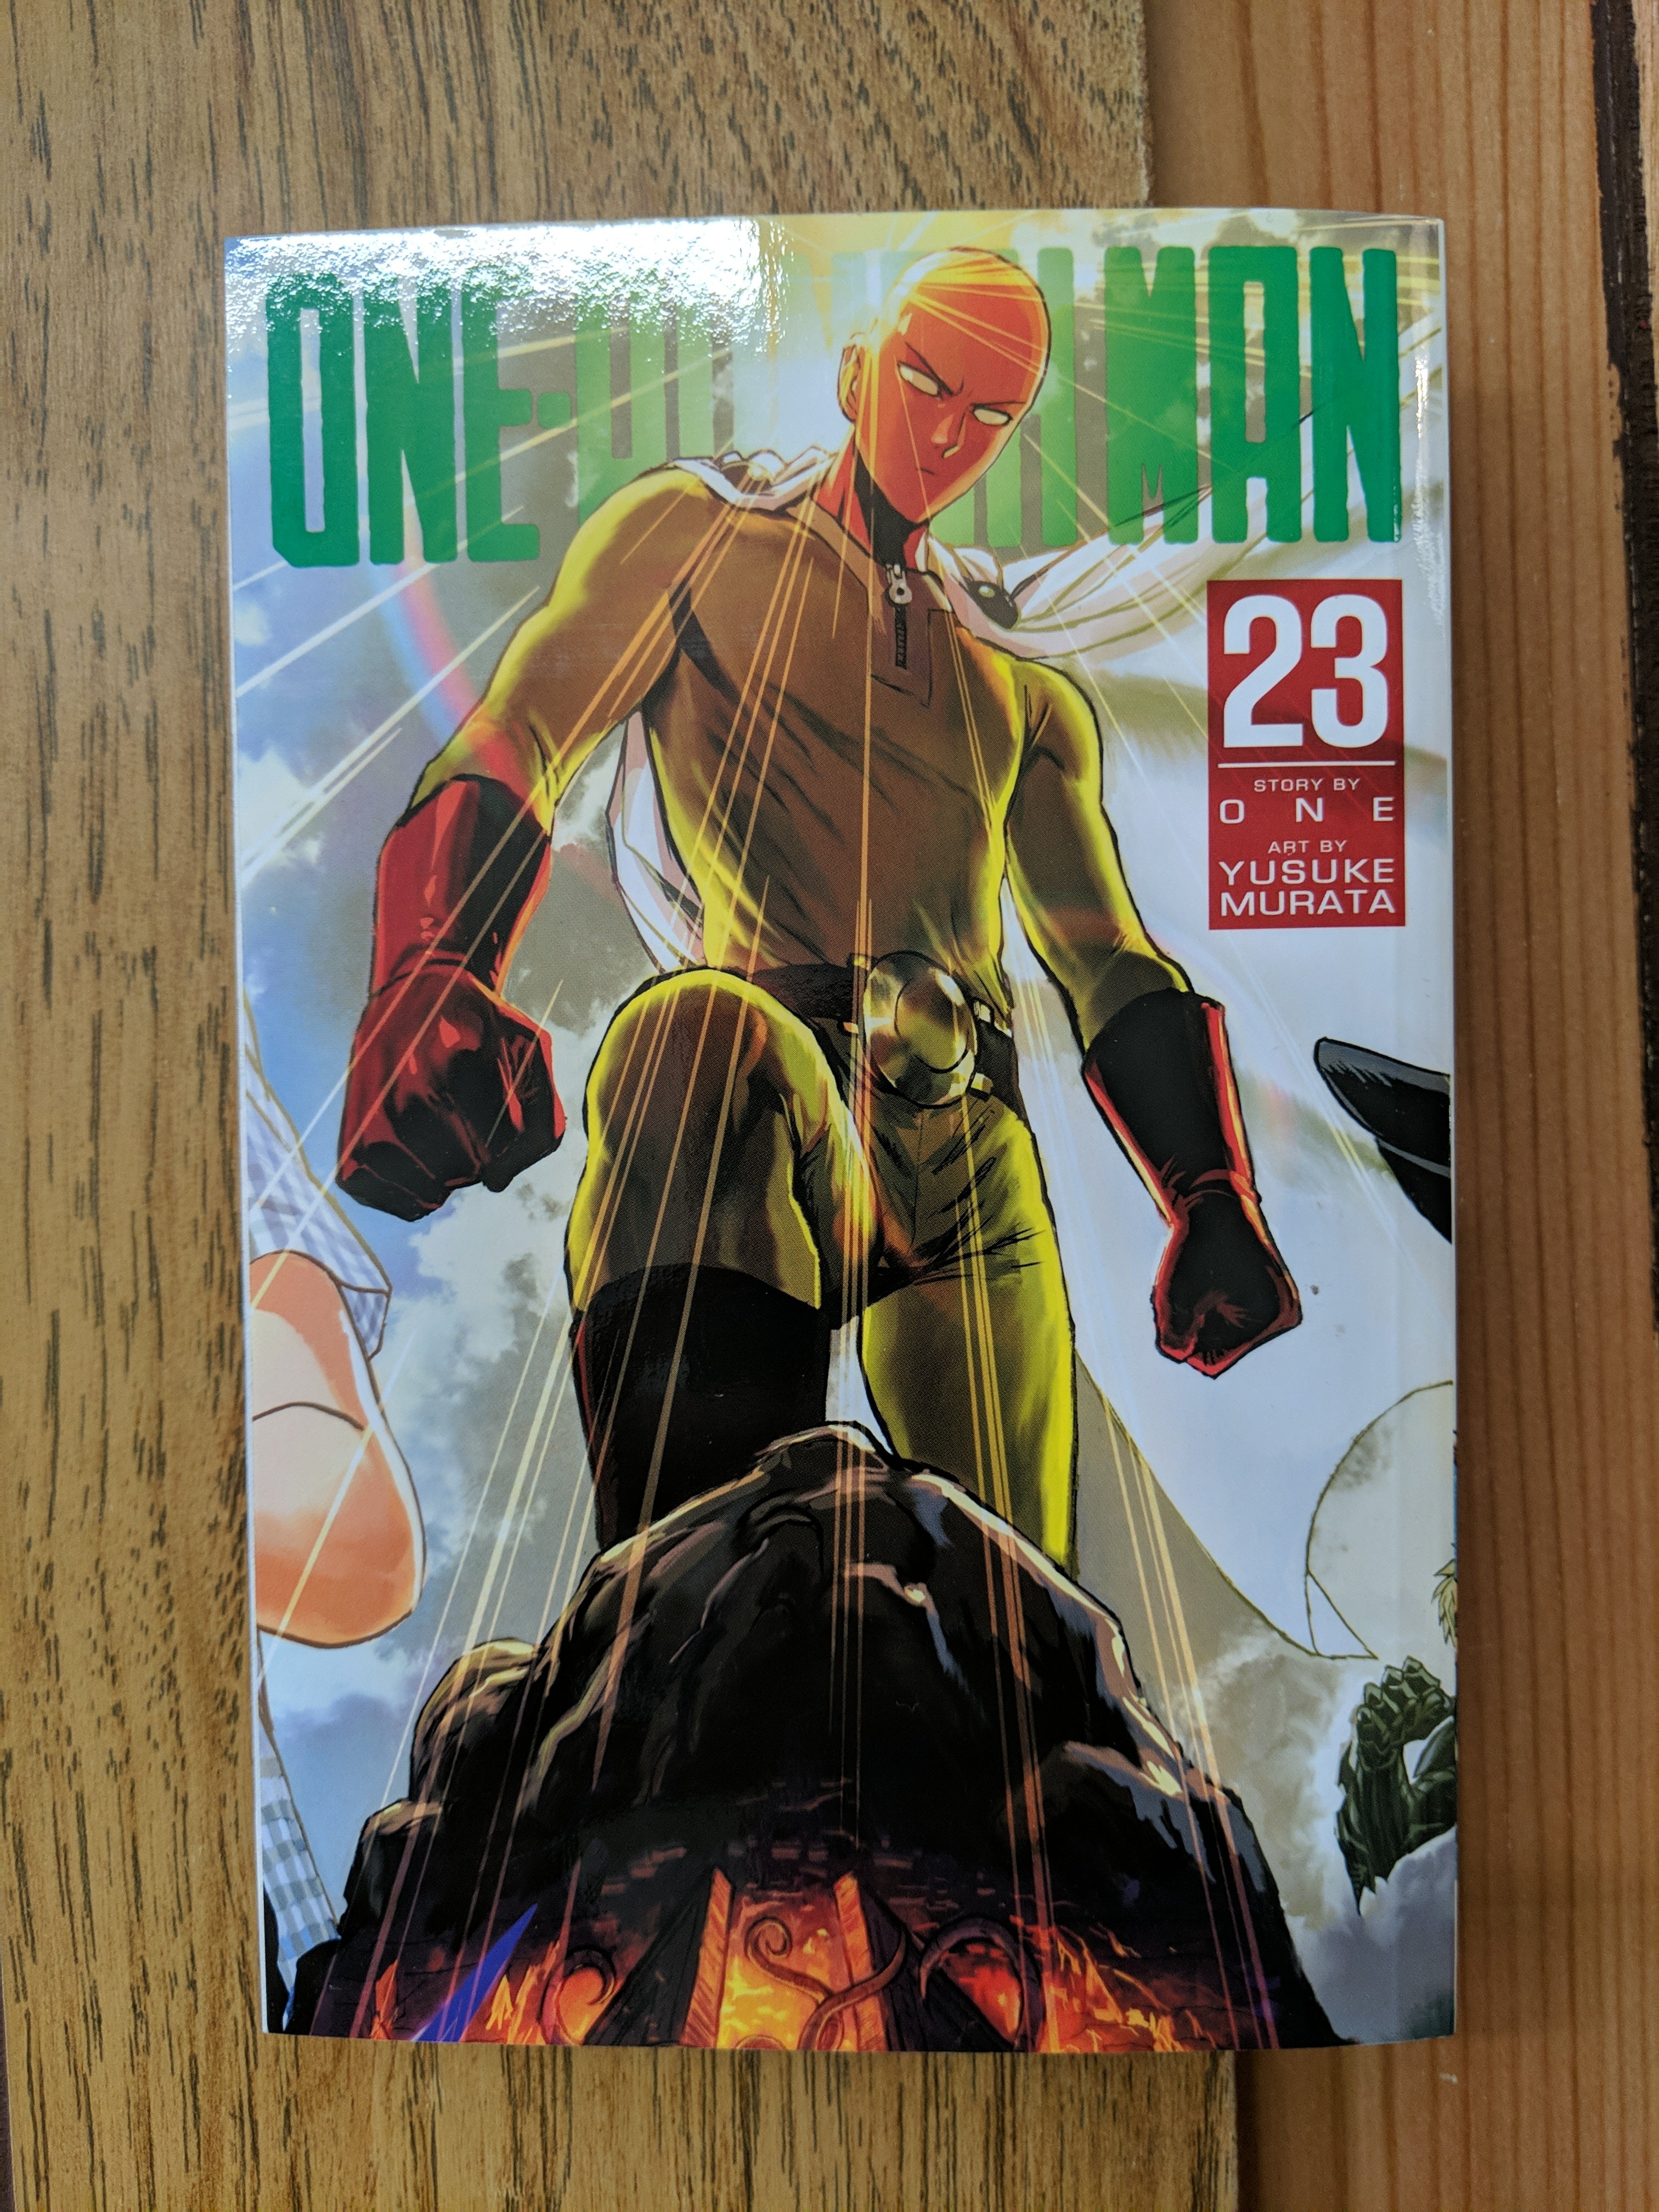 Onepunch-Man 23